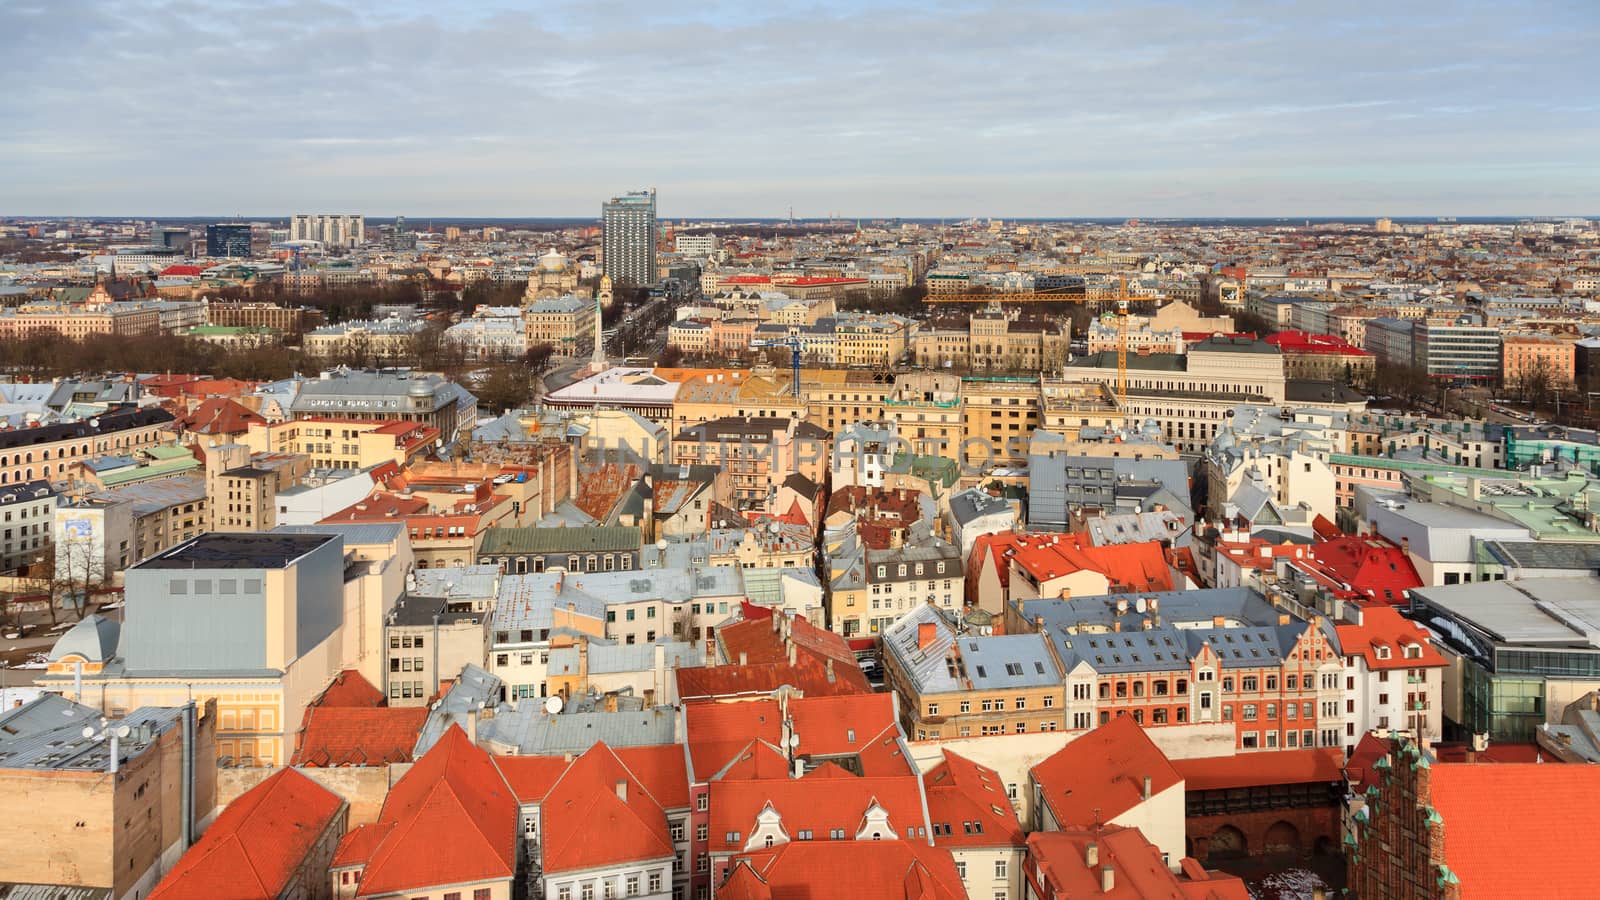 Riga Panorama by ATGImages